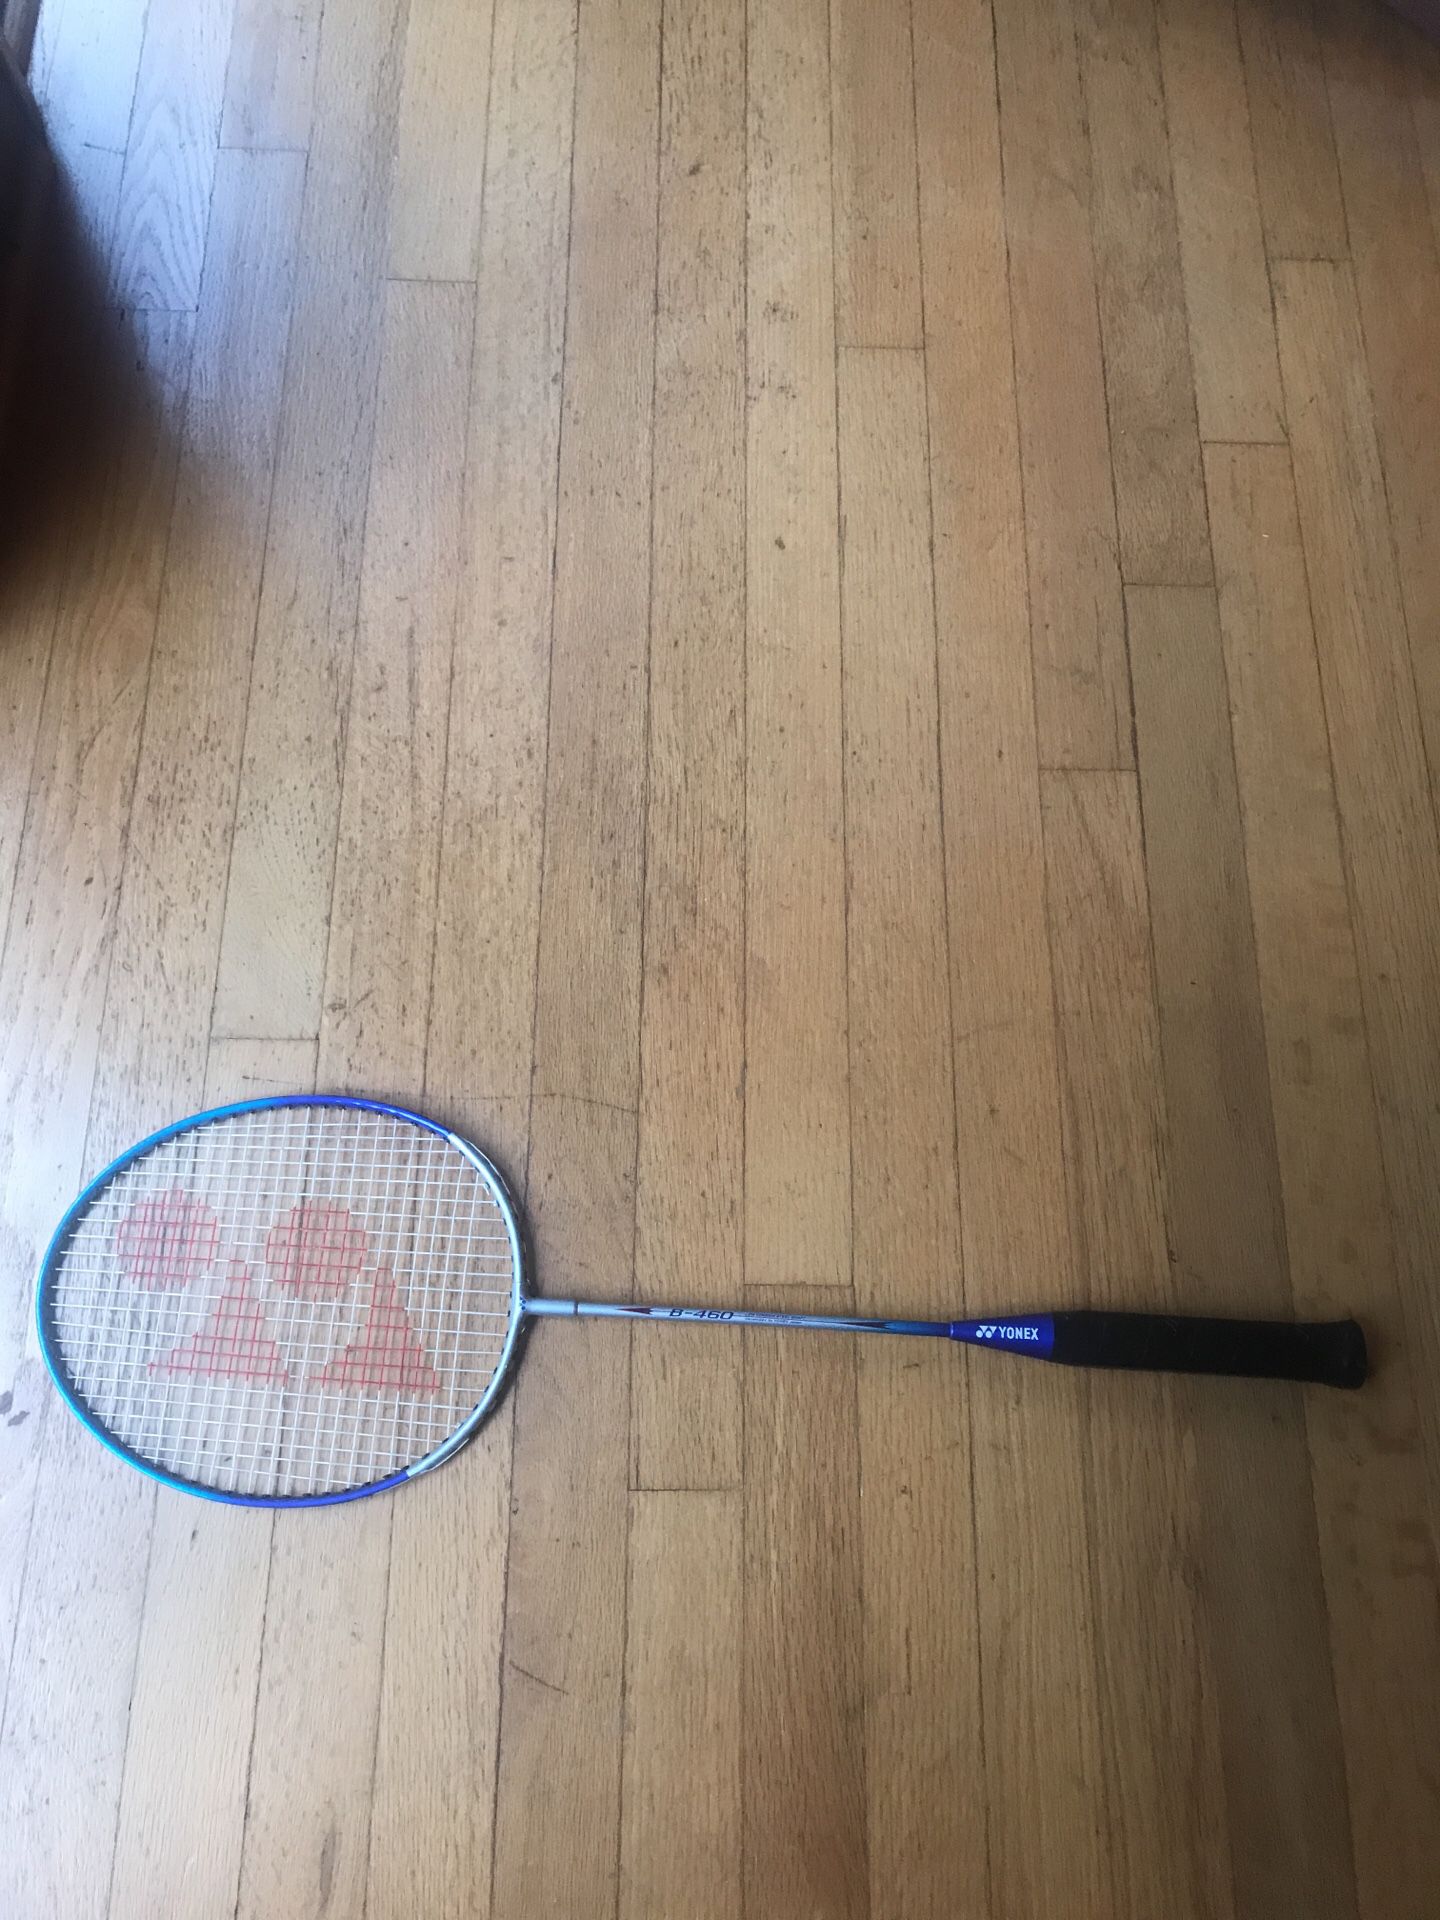 B-460 Badminton racket for Sale in Norfolk, VA -